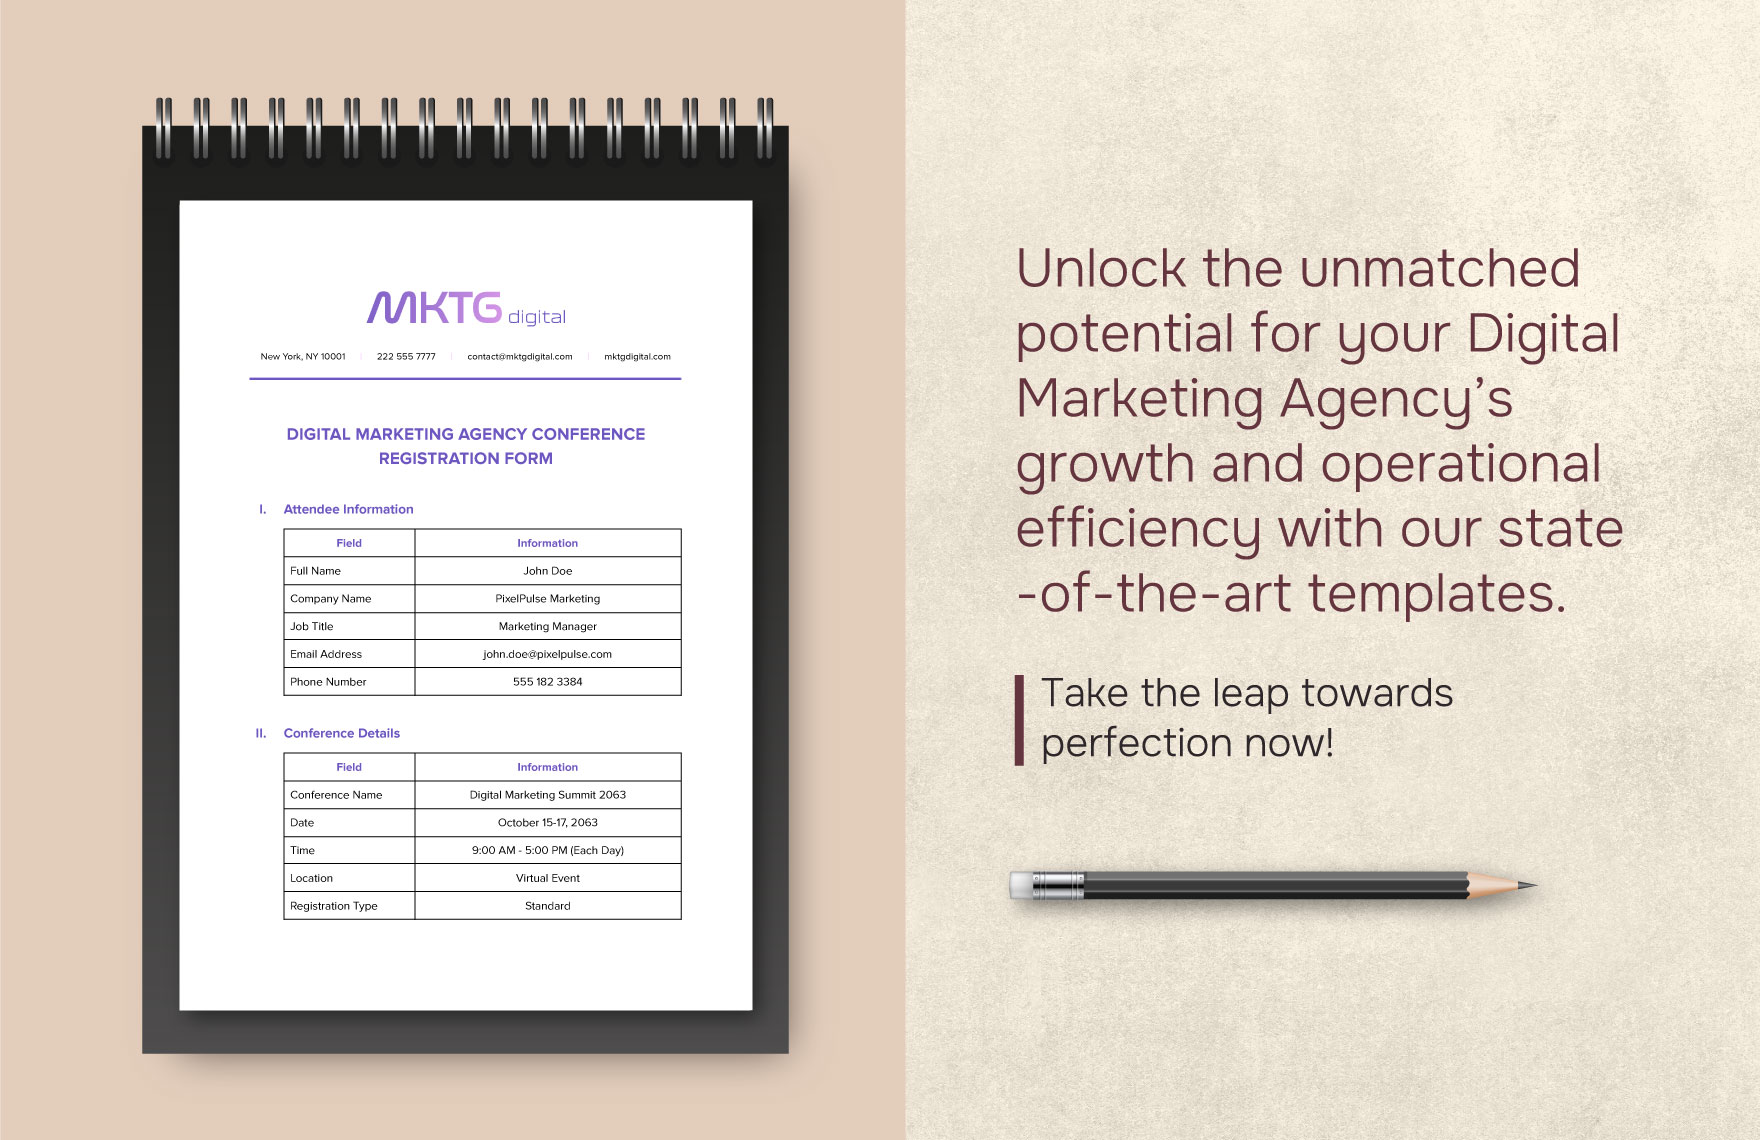 Digital Marketing Agency Event Planning Checklist Template